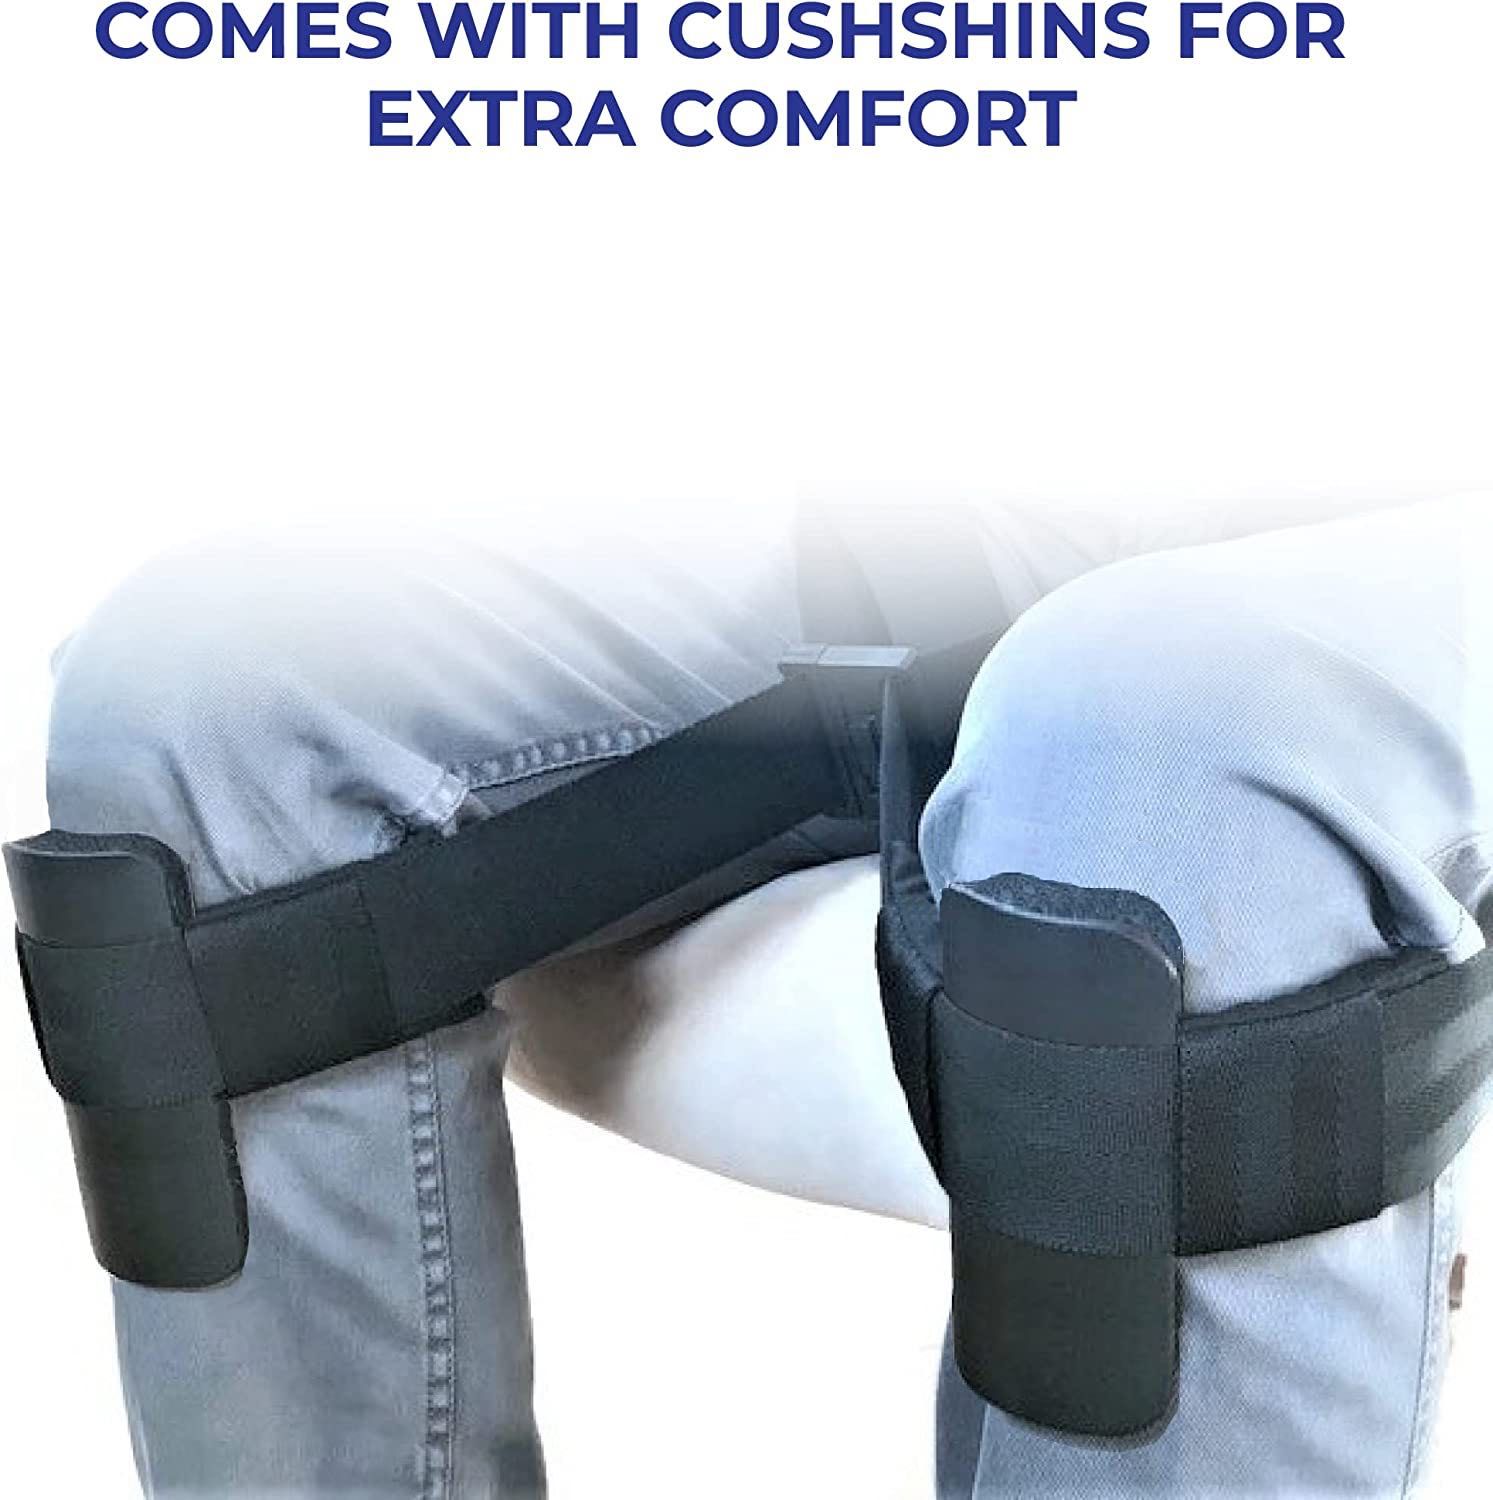 Suport lombar portabil Nada-chair Backup corector postura dureri spate